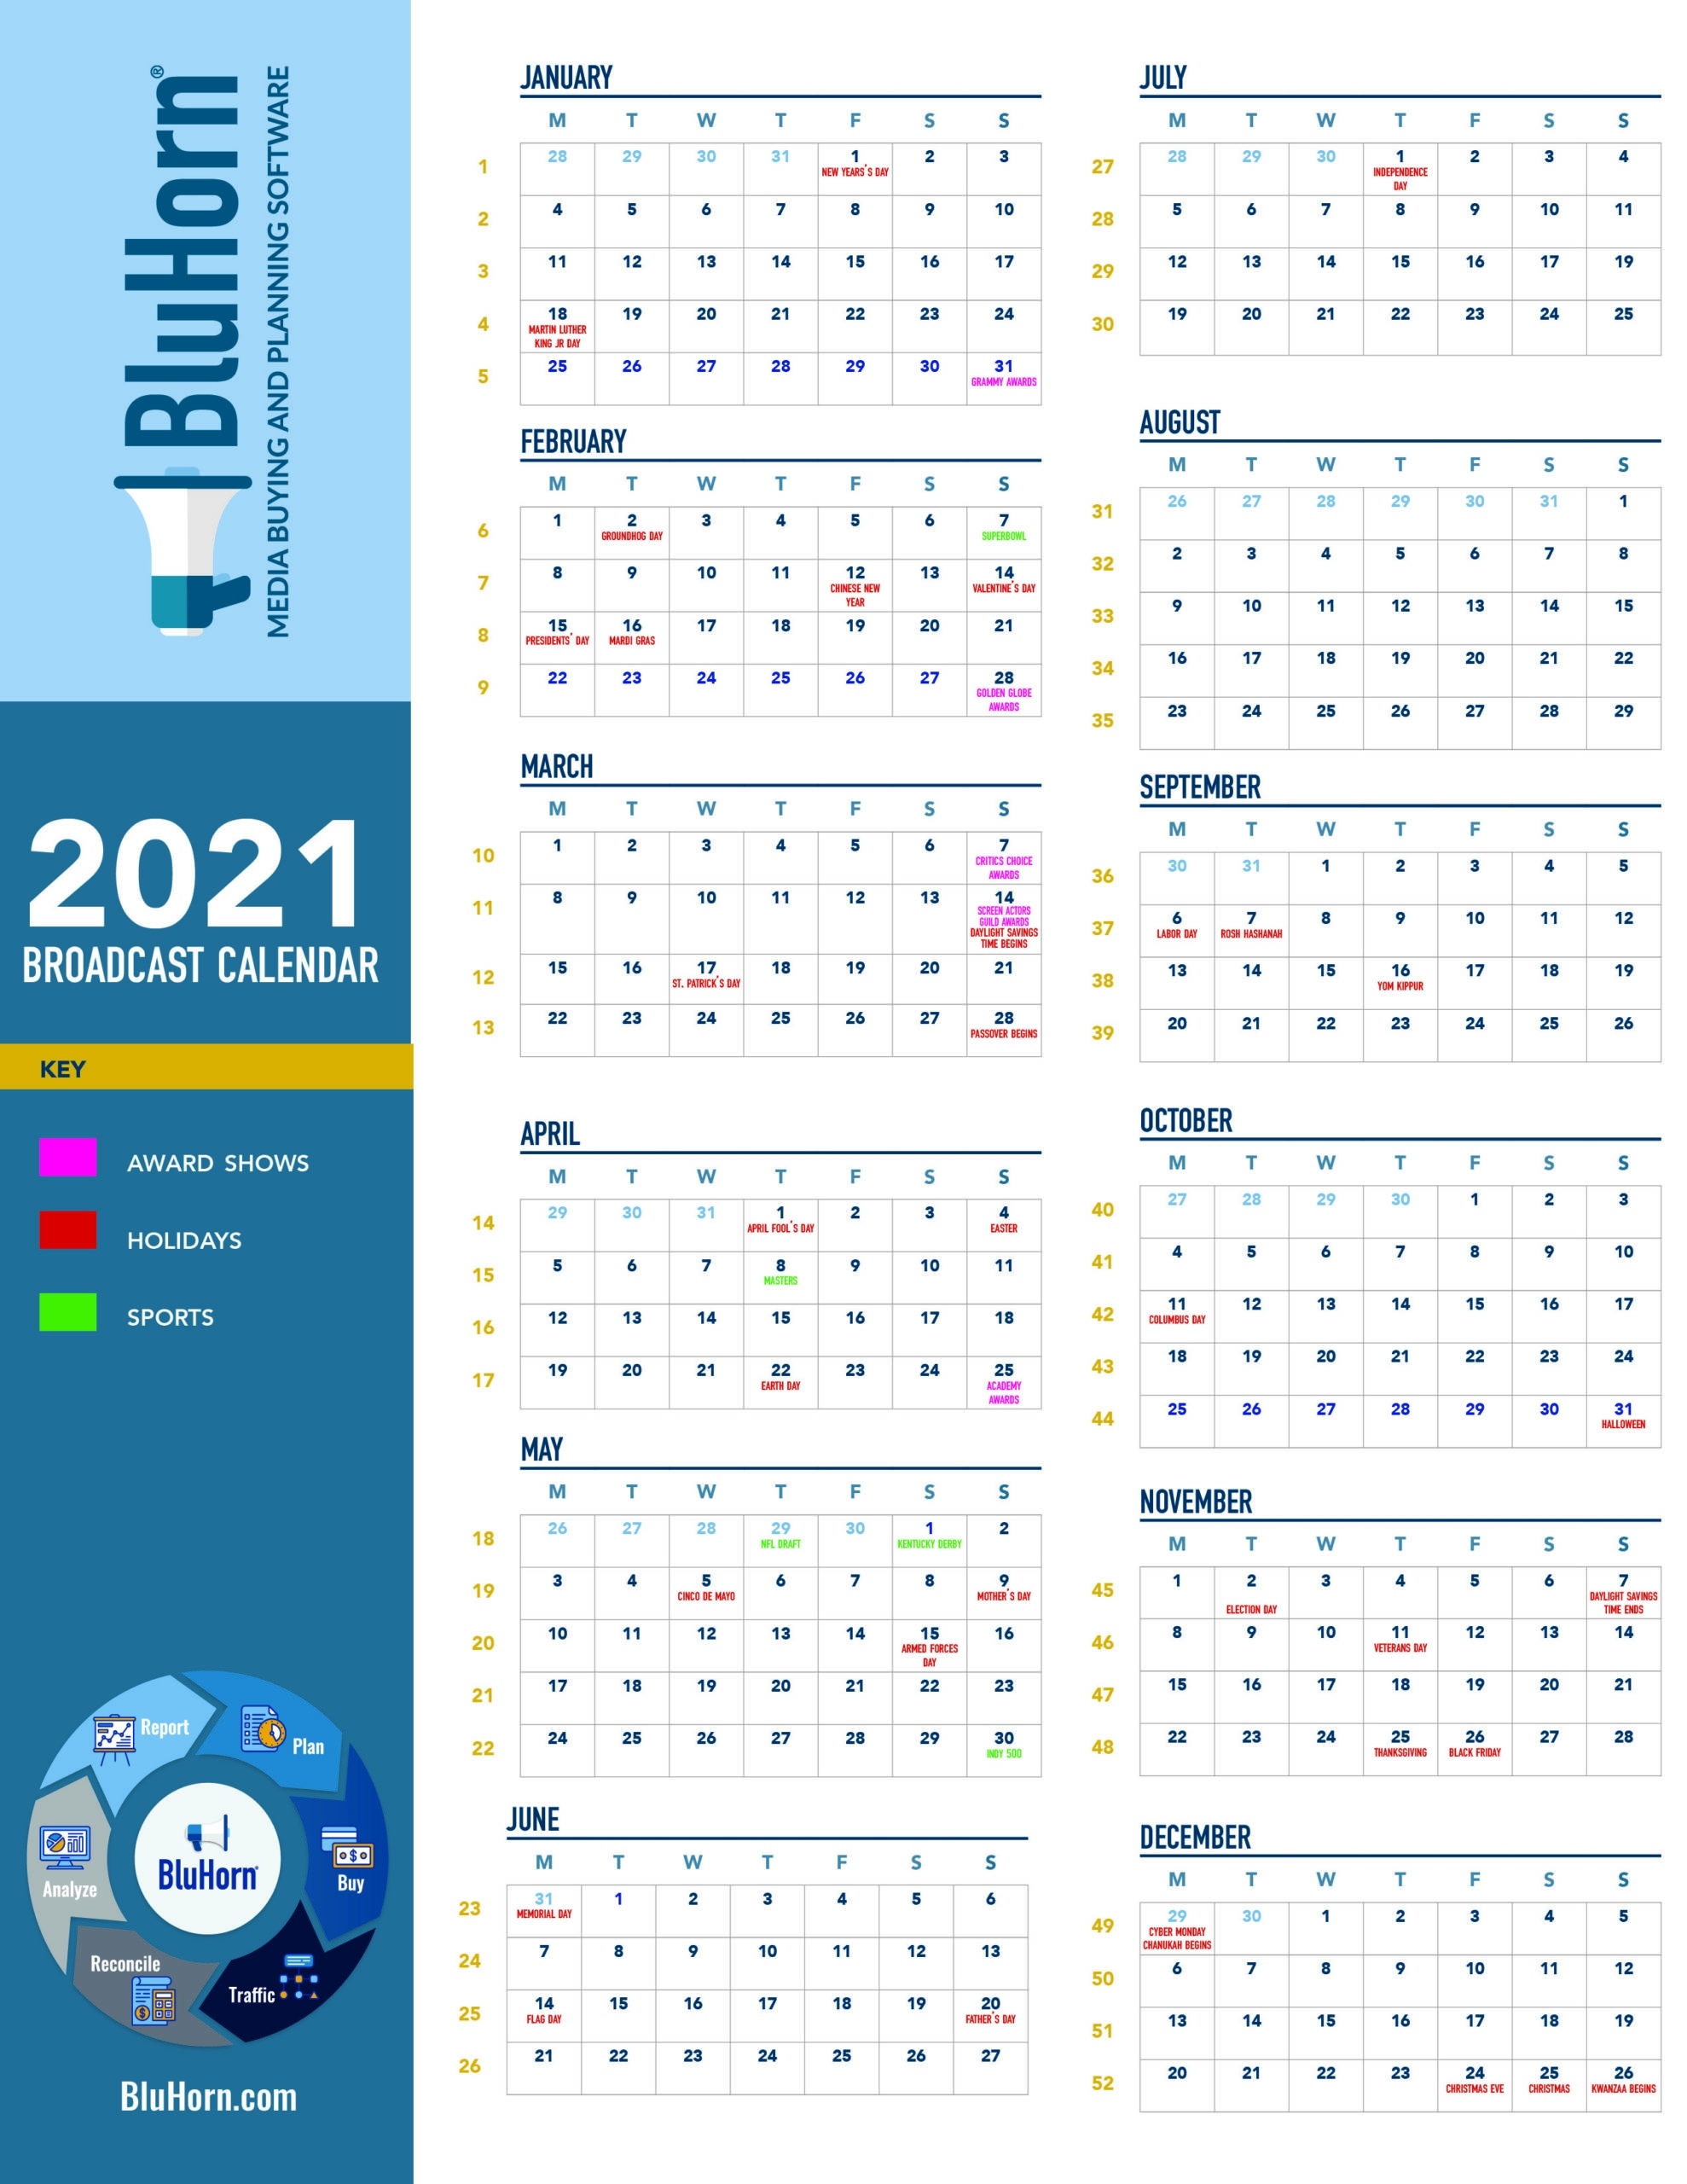 Free Broadcast Calendar | Bluhorn Broadcast Calendar 2021